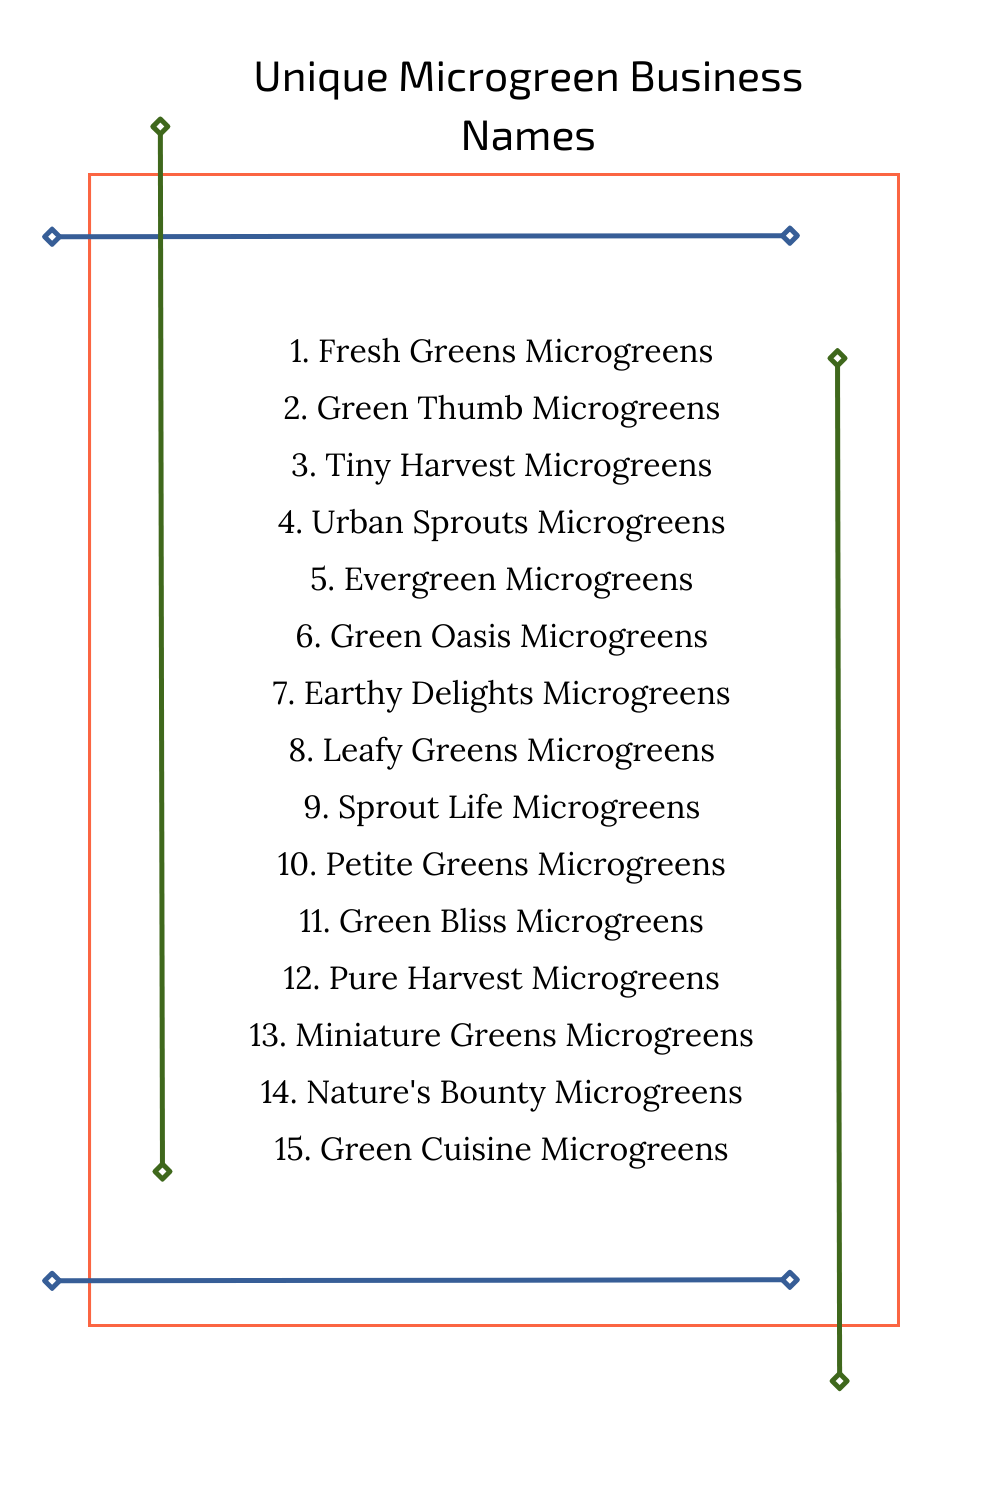 Unique Microgreen Business Names